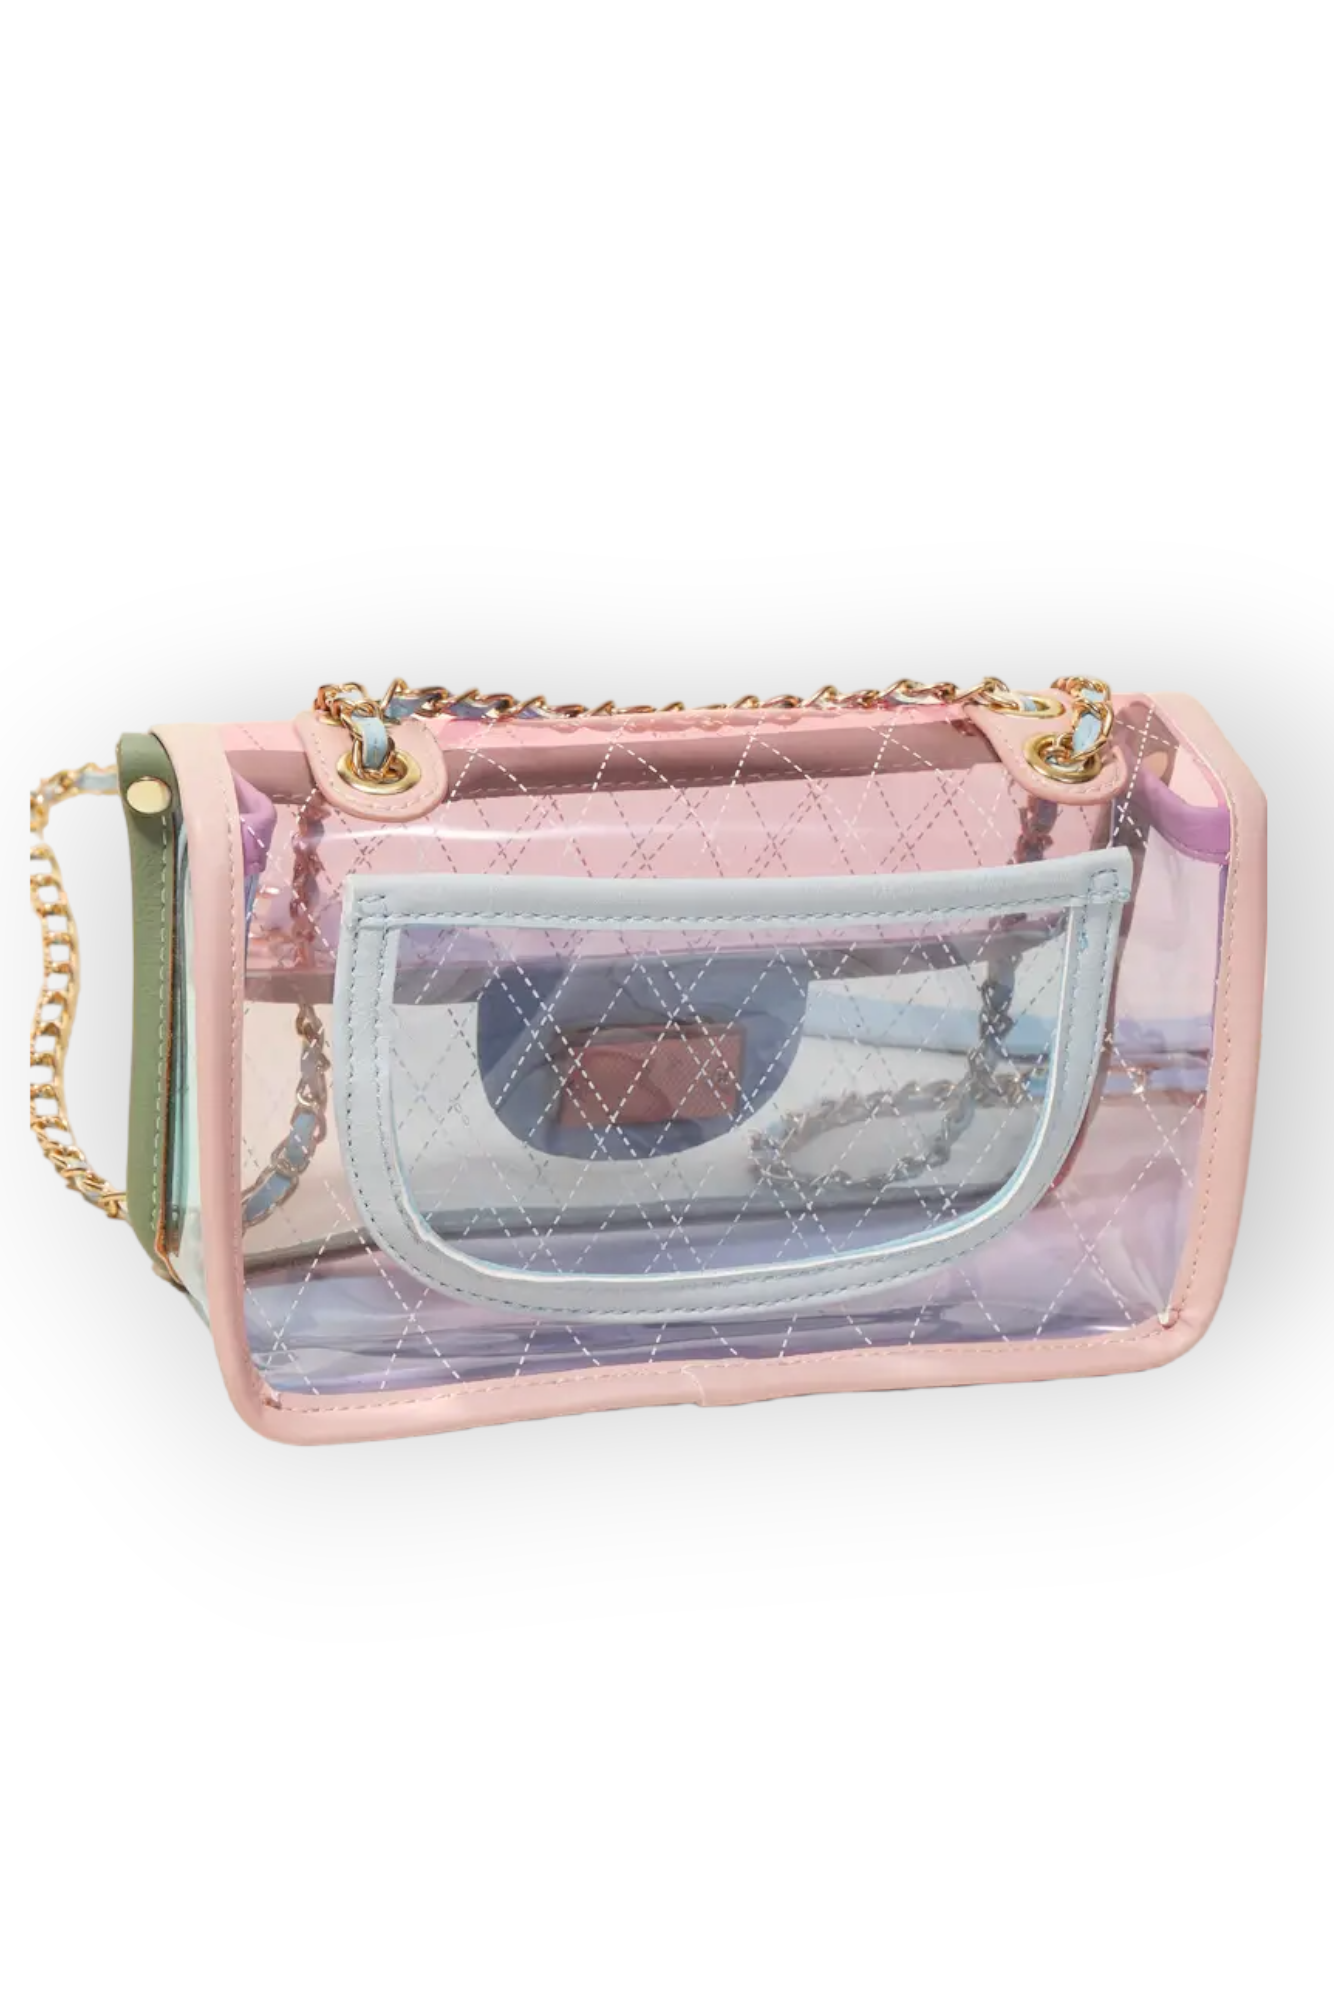 chanel clear purse